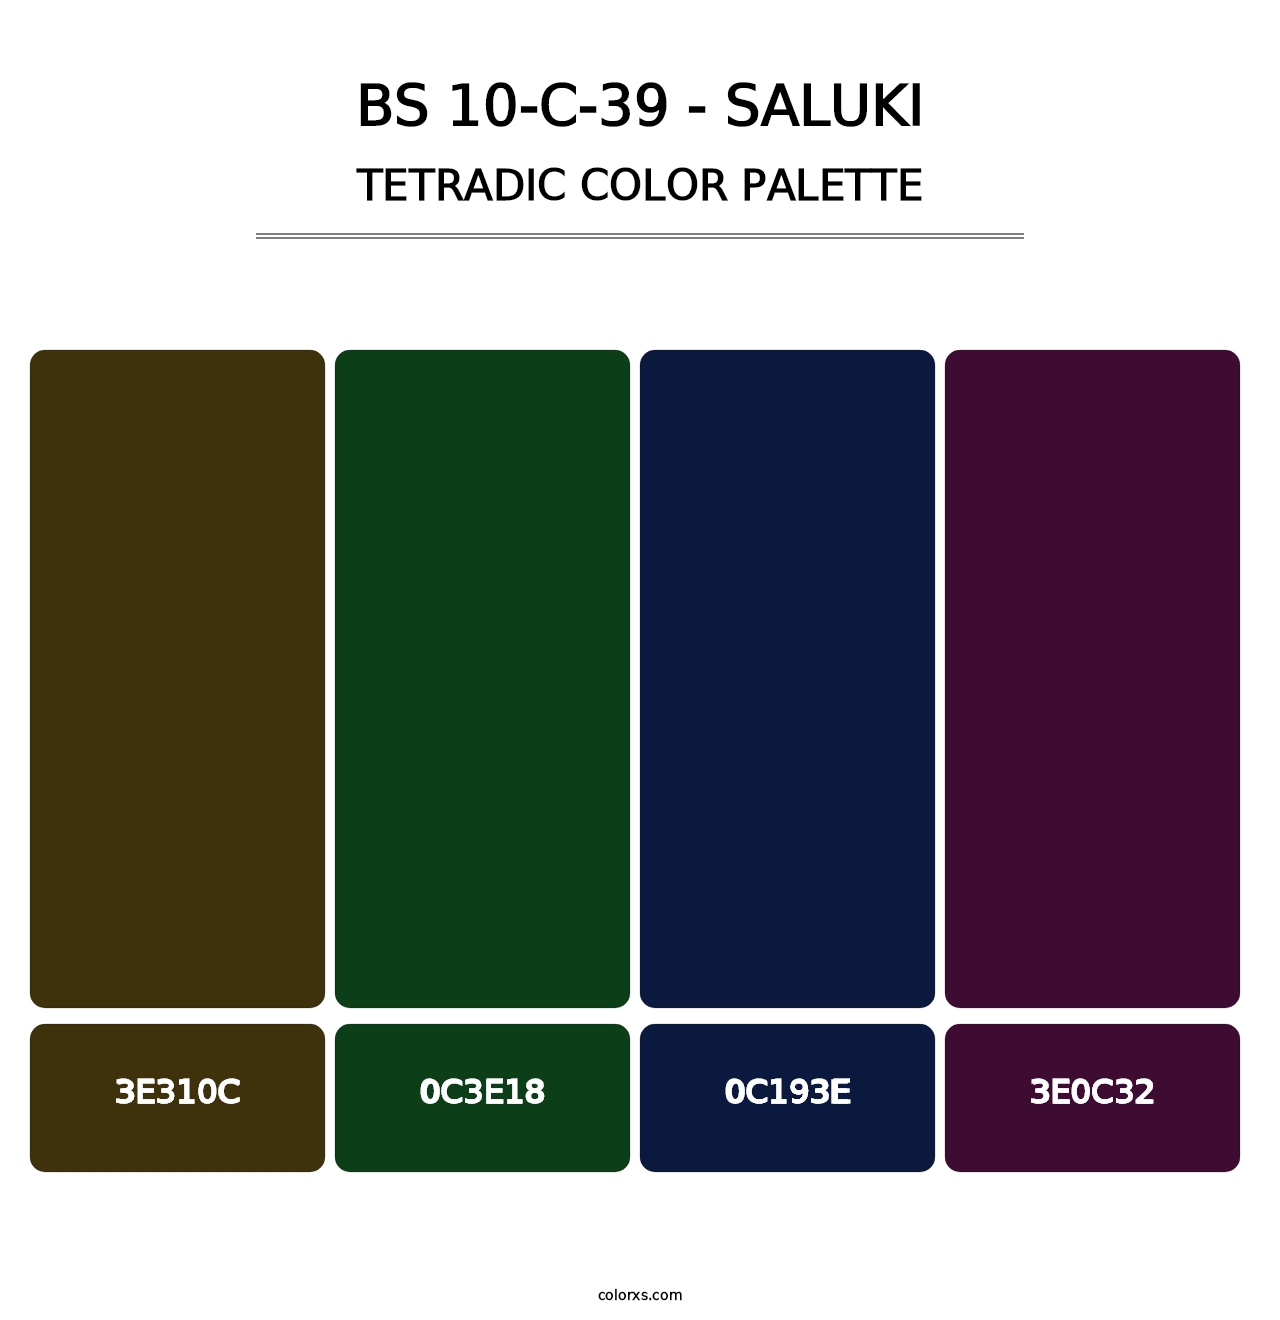 BS 10-C-39 - Saluki - Tetradic Color Palette